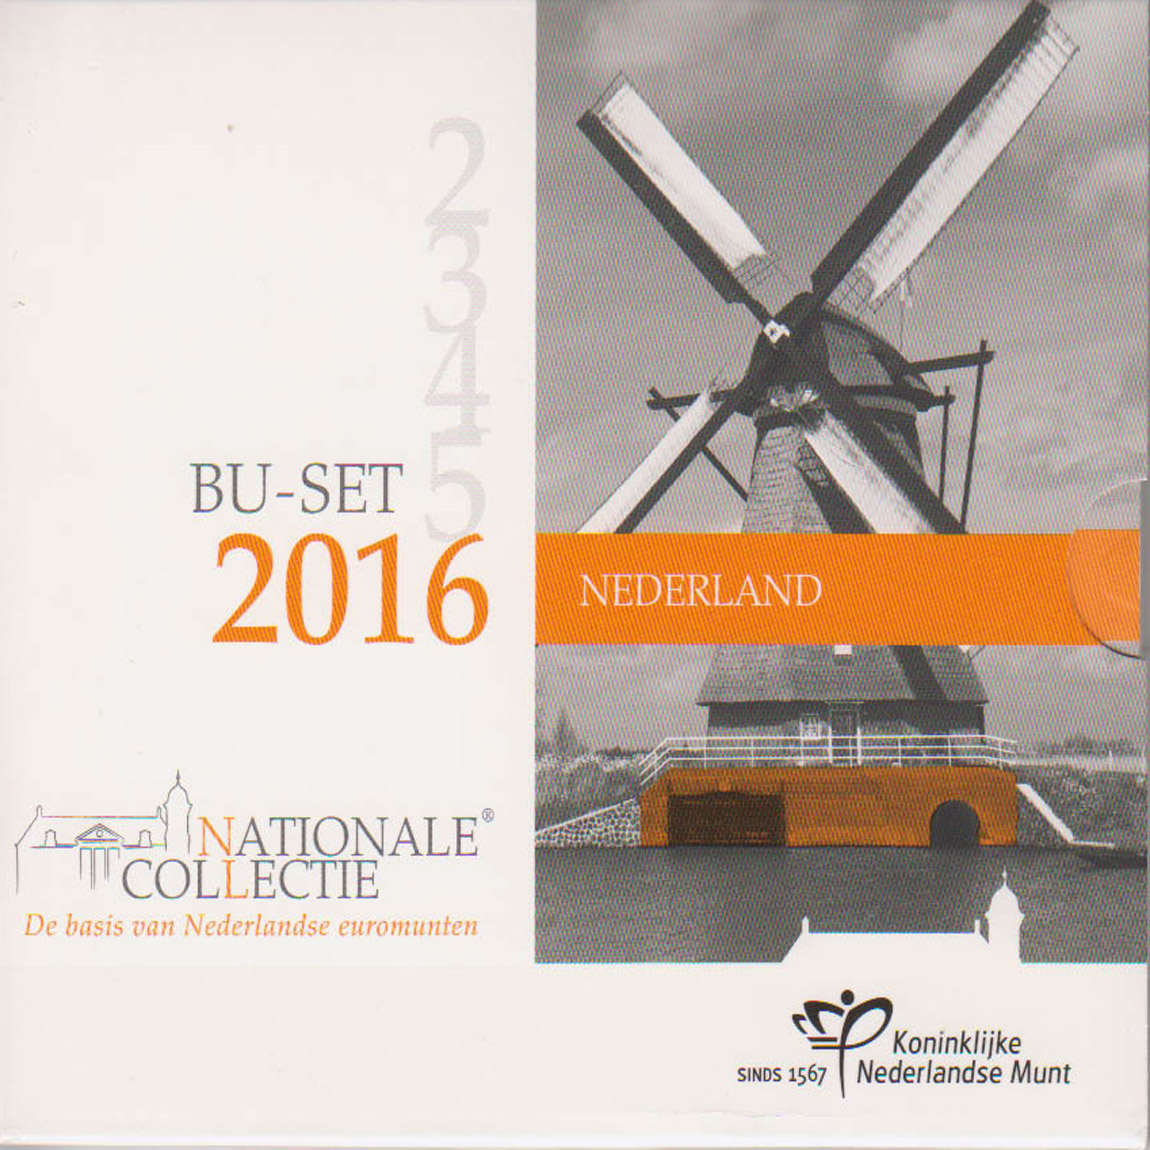  Offiz. Euro-KMS Niederlande *Nationale Collectie - Wissenschaft* 2016   